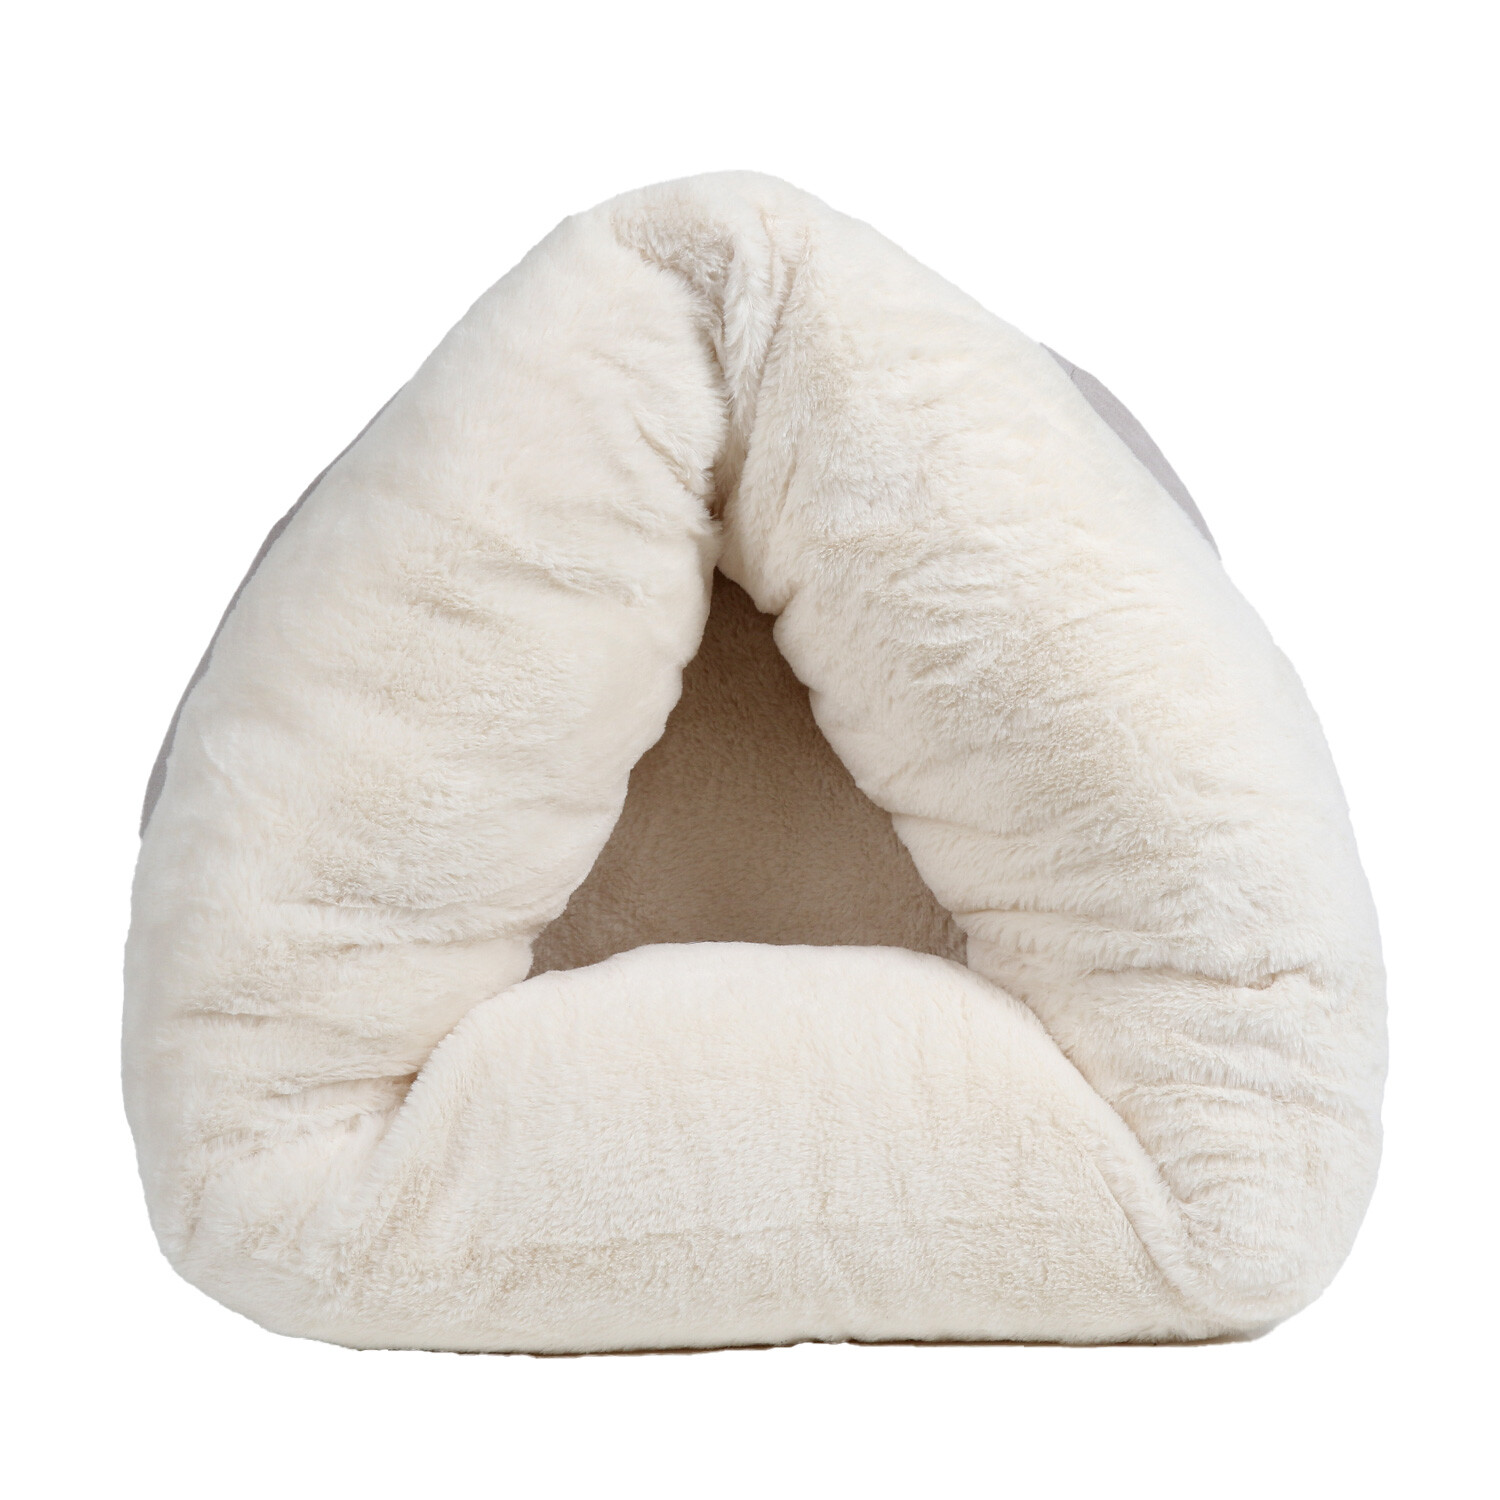 Luxury Soft Pet Bed - White Image 1